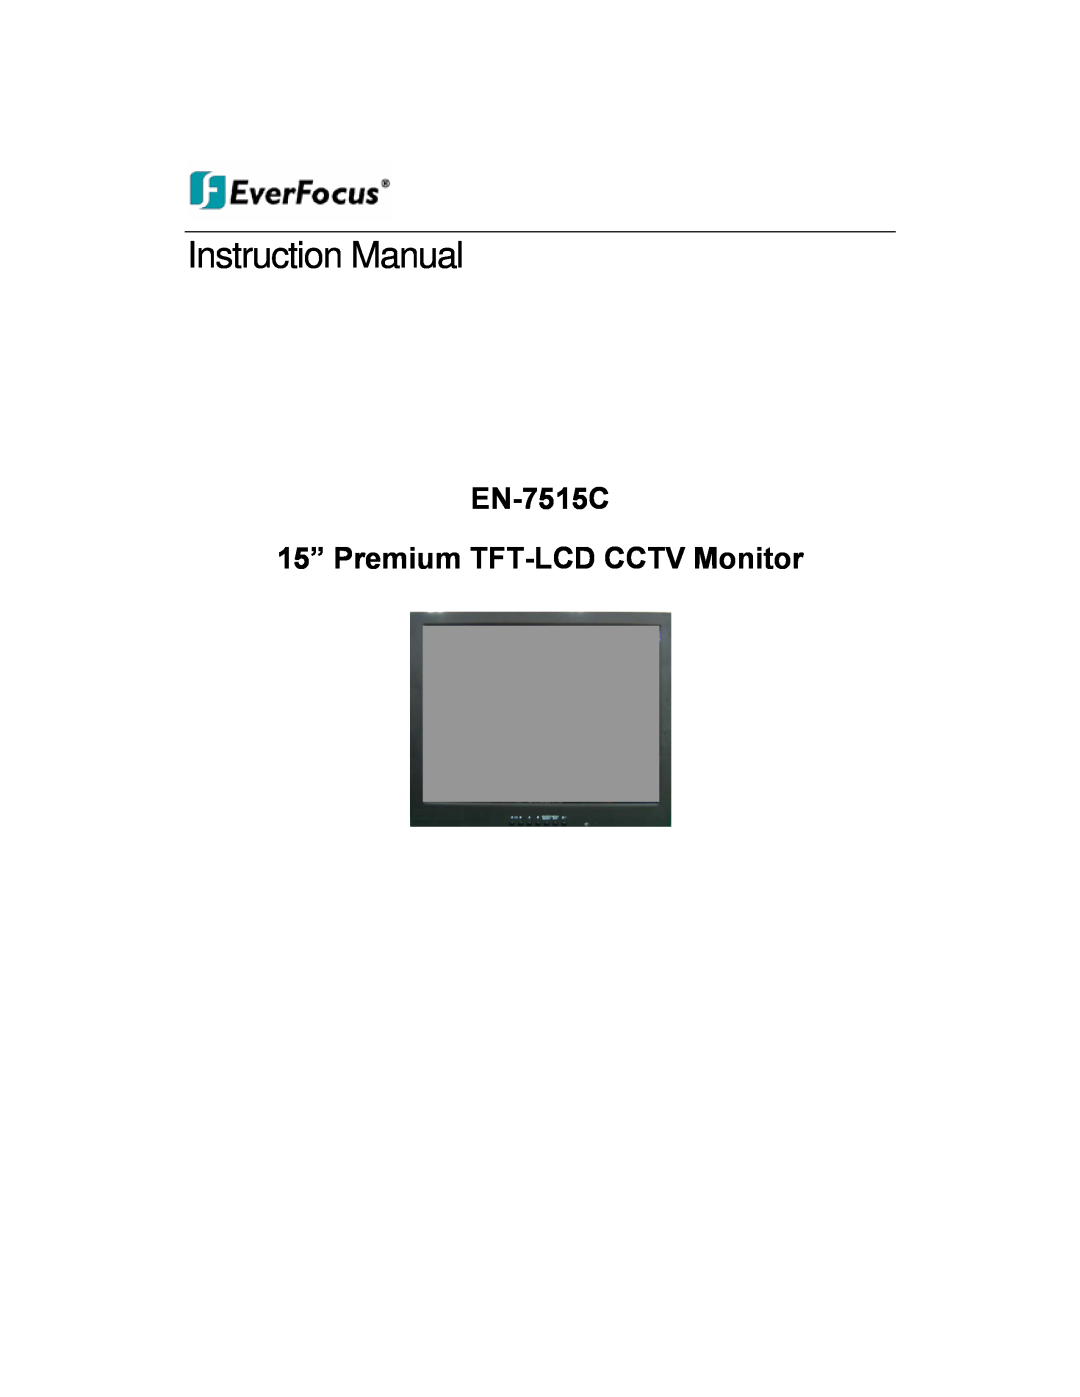 EverFocus instruction manual EN-7515C 15” Premium TFT-LCD CCTV Monitor, Instruction Manual 